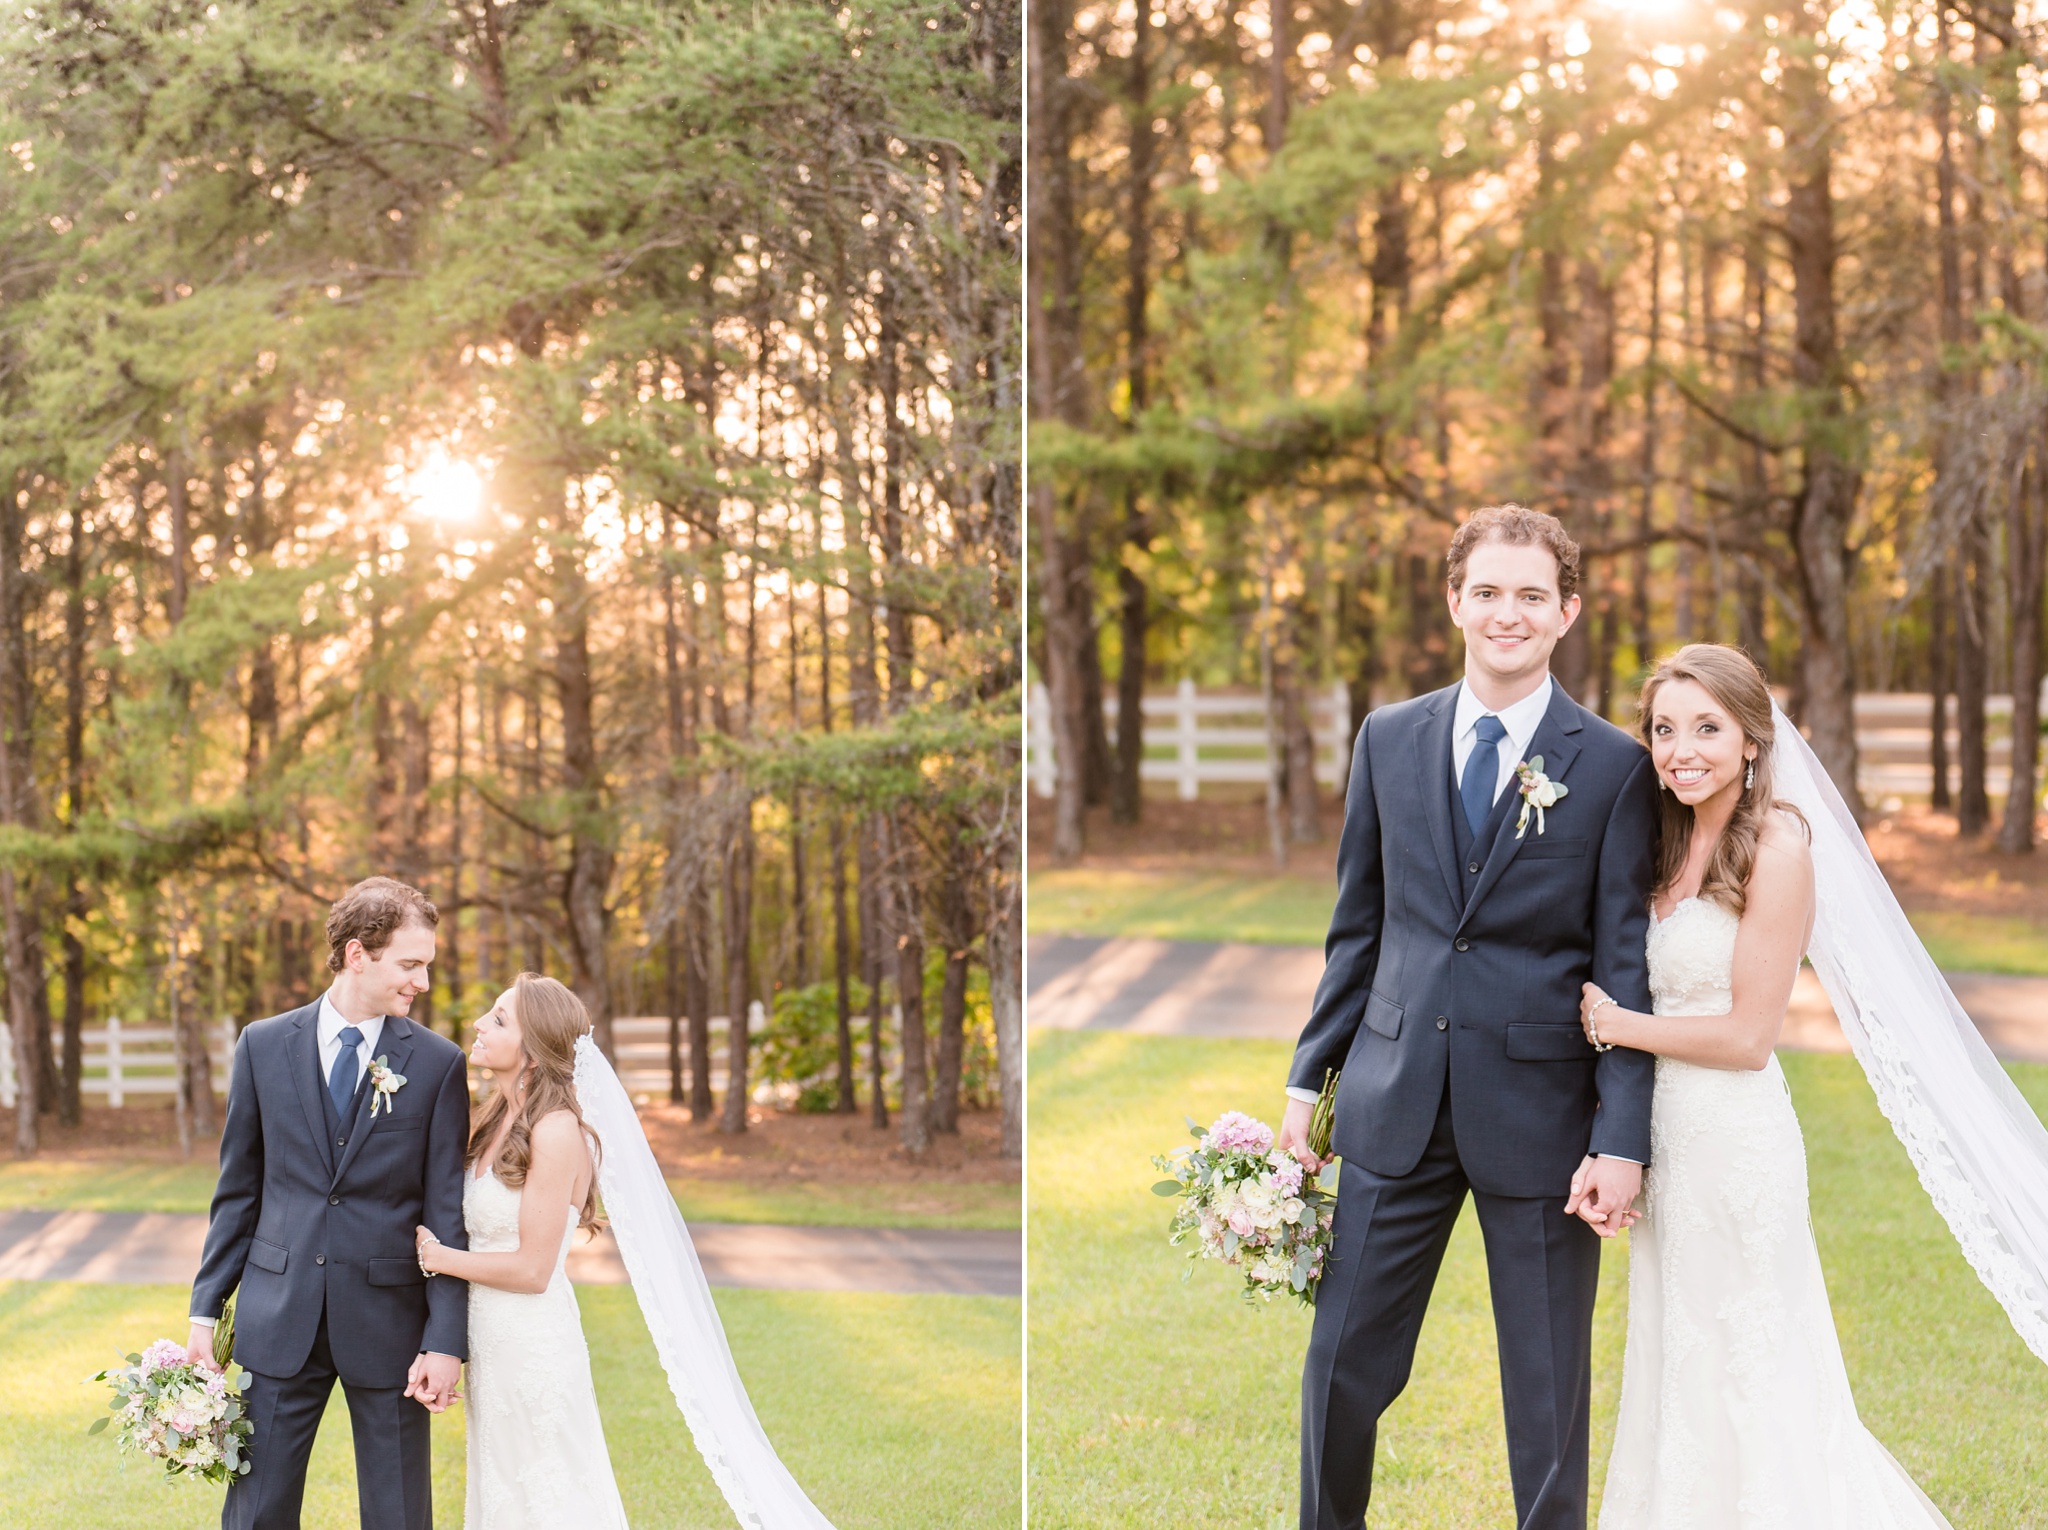 Sonnet House Blush and Gold Spring Wedding | Birmingham Alabama Wedding Photographers_0075.jpg